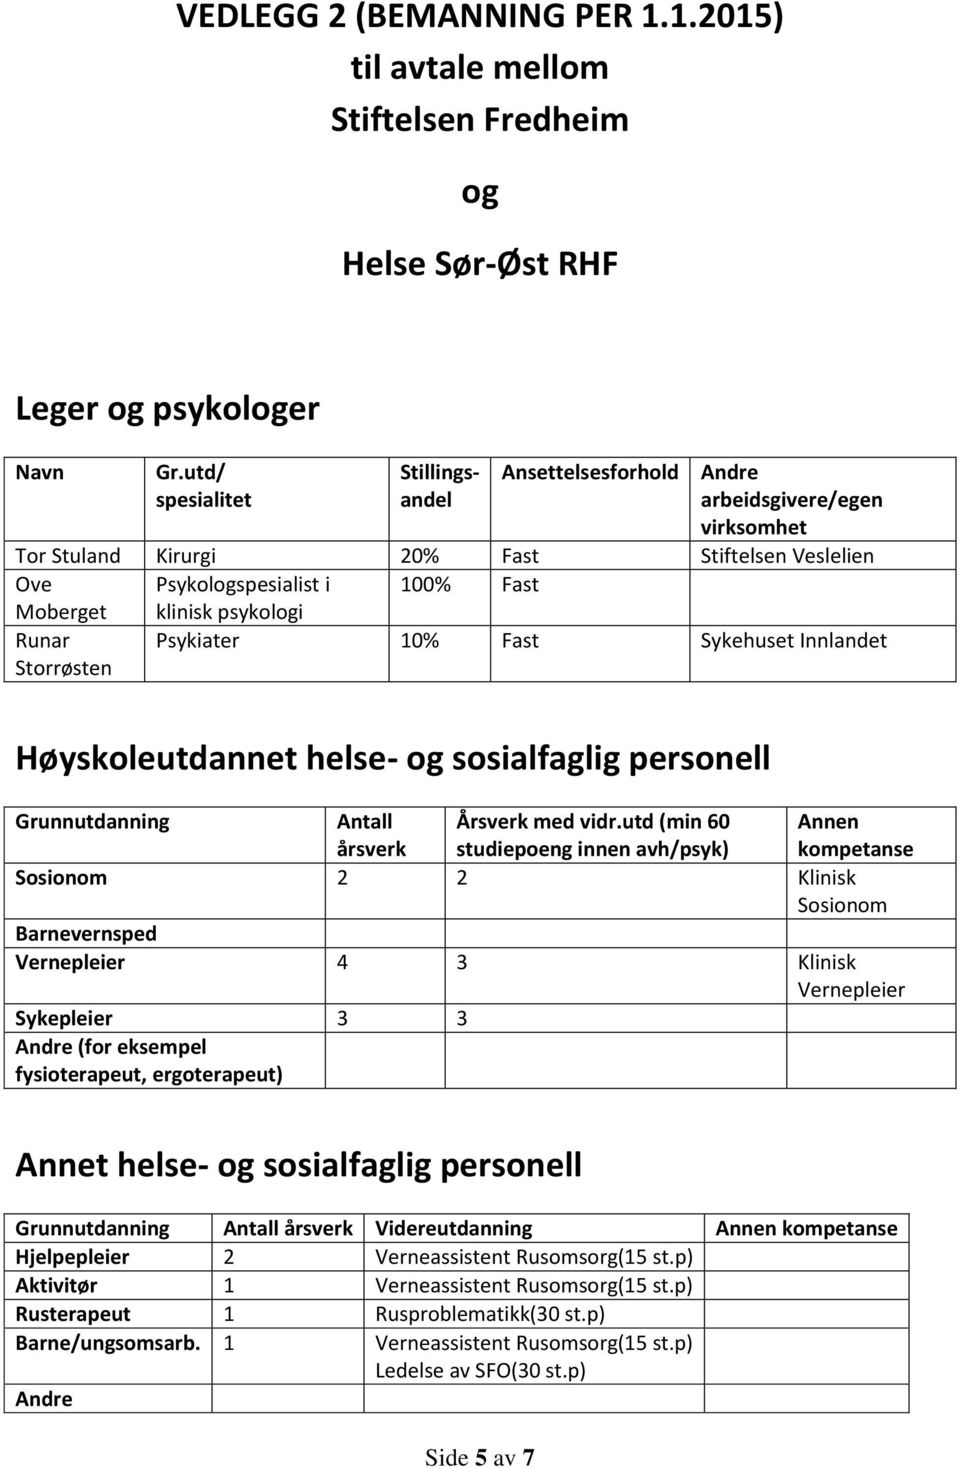 klinisk psykologi Psykiater 10% Fast Sykehuset Innlandet Høyskoleutdannet helse- og sosialfaglig personell Grunnutdanning Antall årsverk Årsverk med vidr.